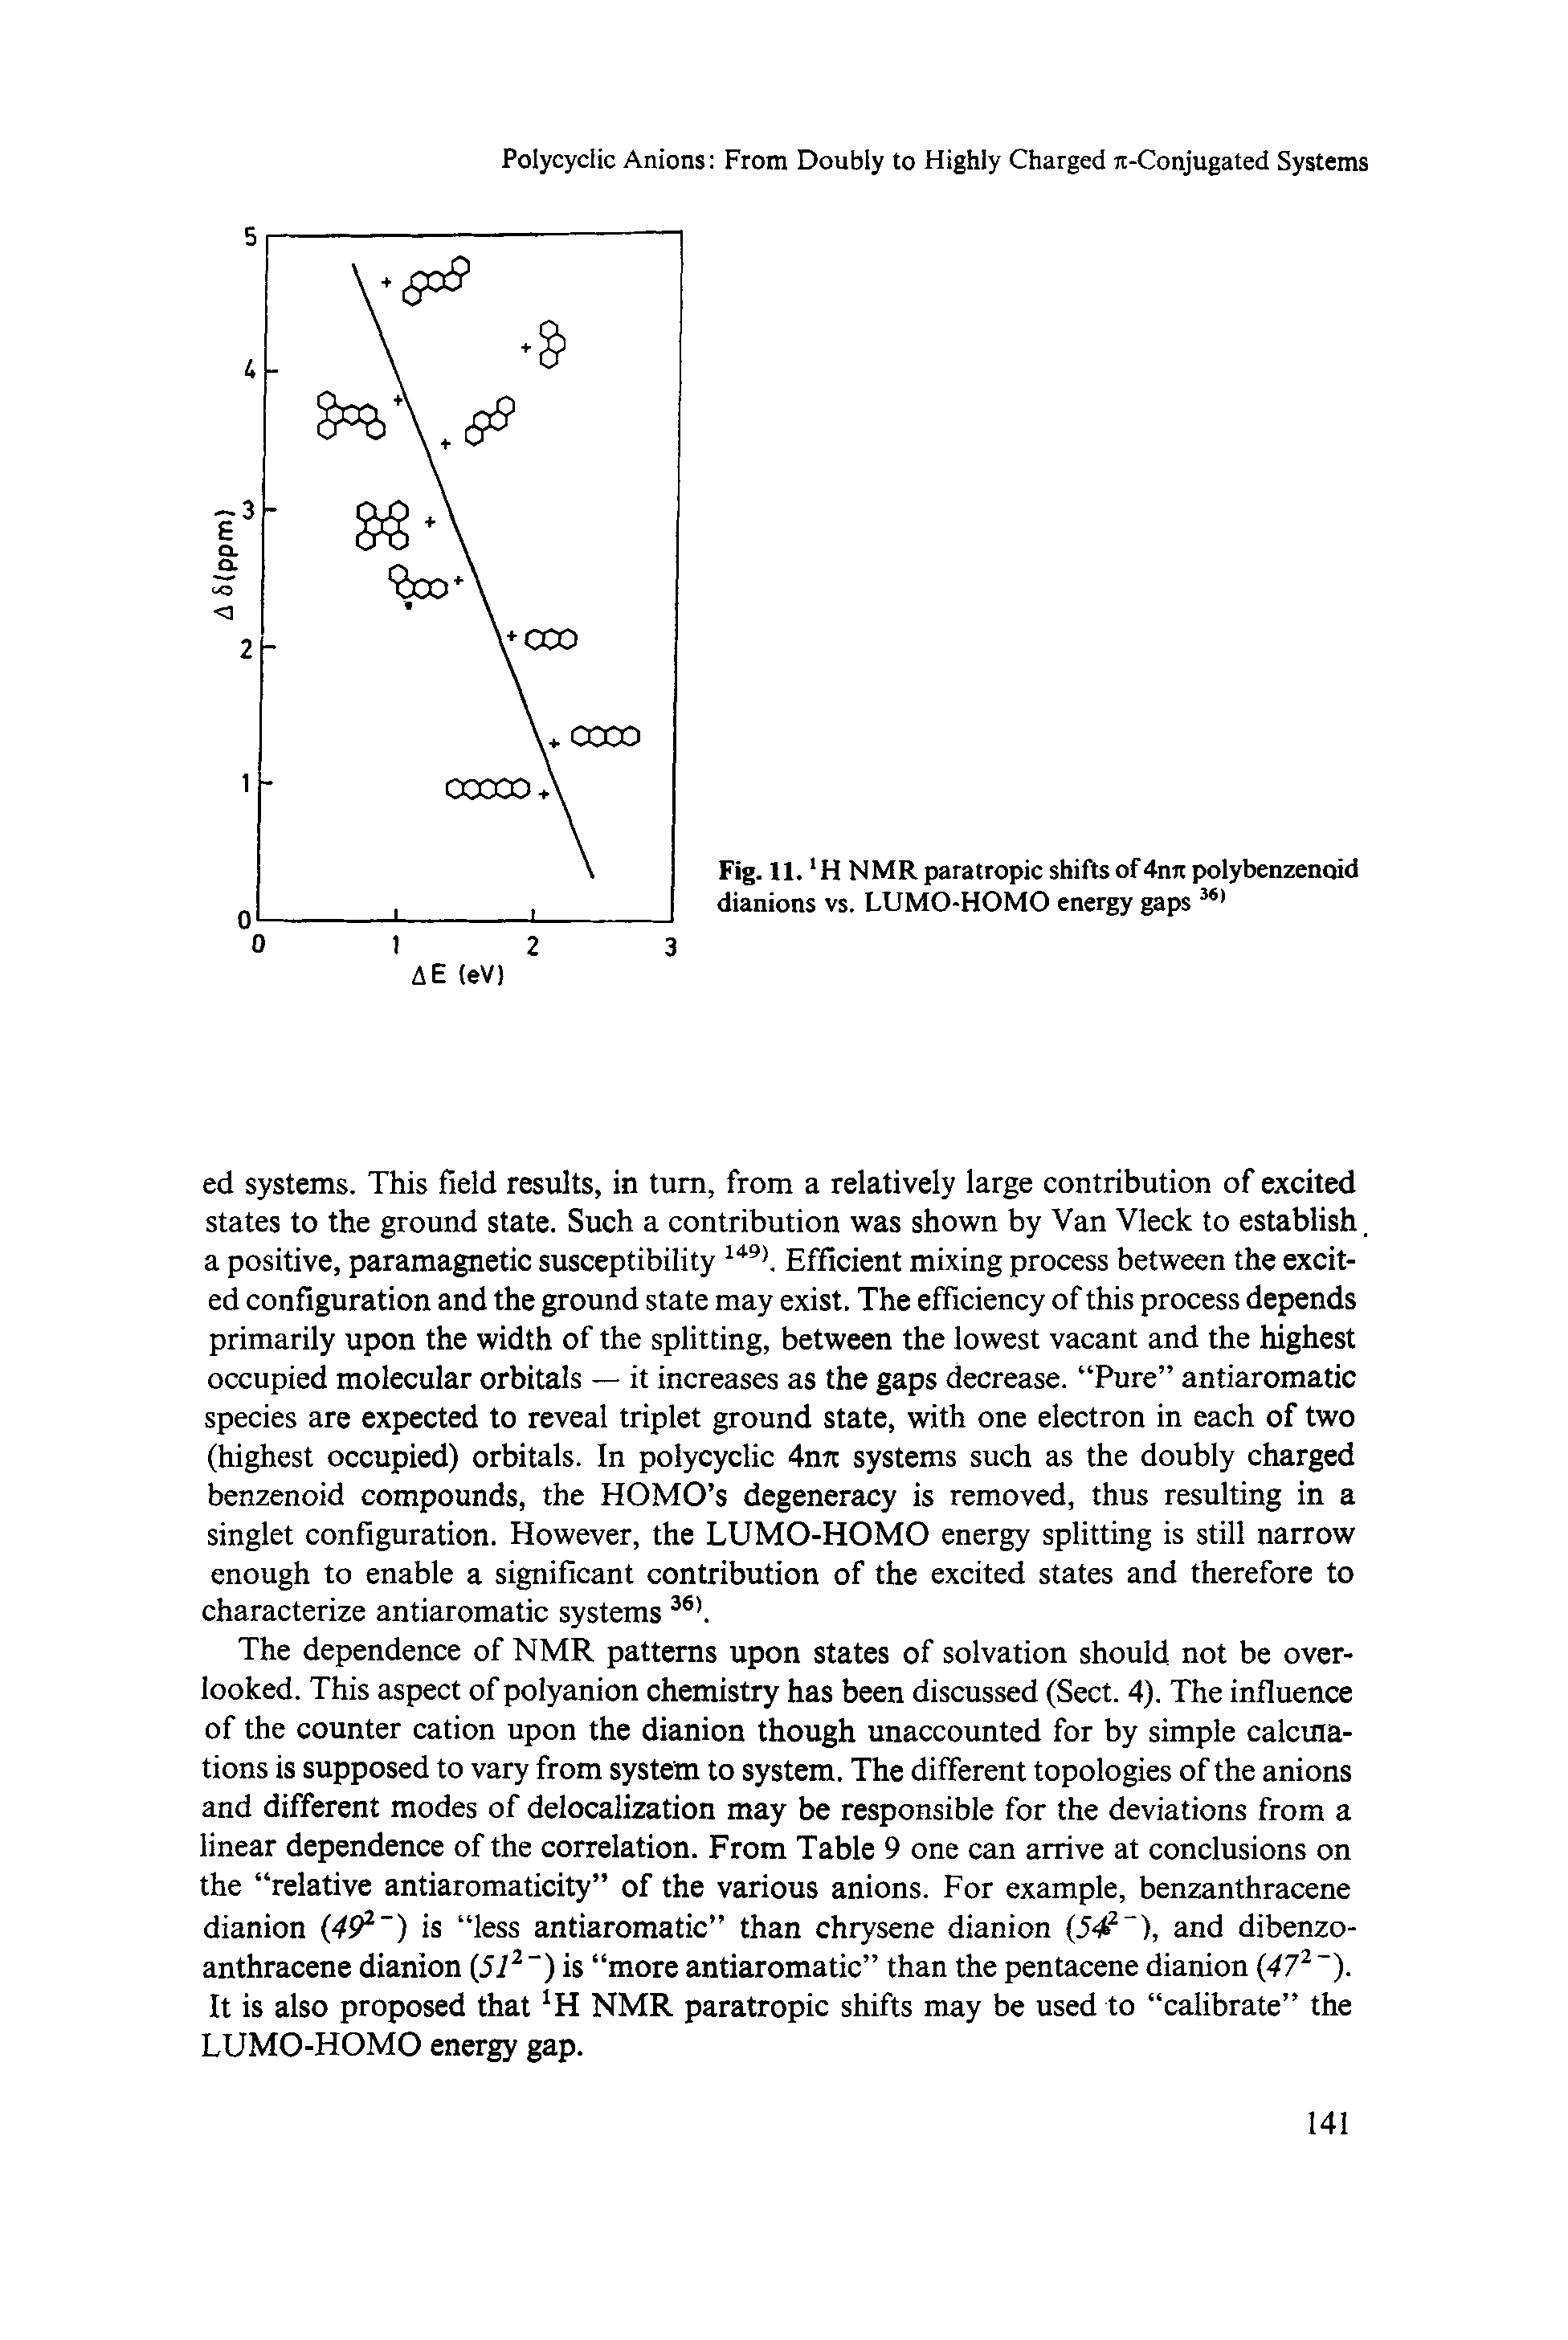 Fig. 11. H NMRparatropic shifts of 4nrt polybenzenoid dianions vs. LUMO-HOMO energy gaps 361...